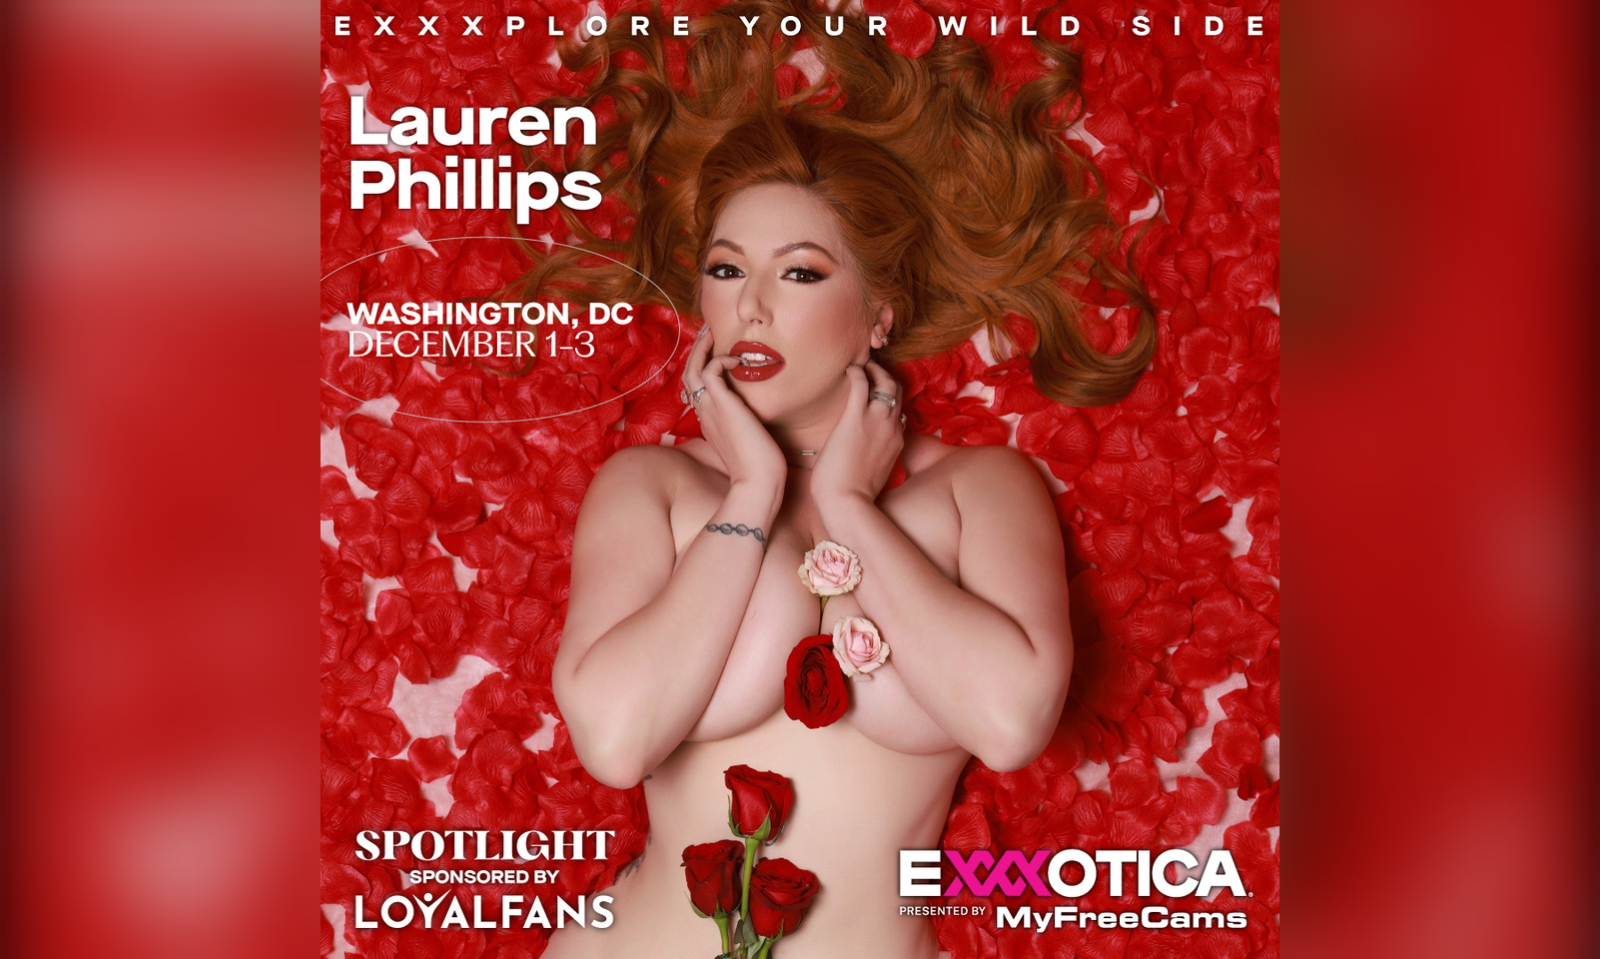 Lauren Phillips Set to Appear at Exxxotica D.C.